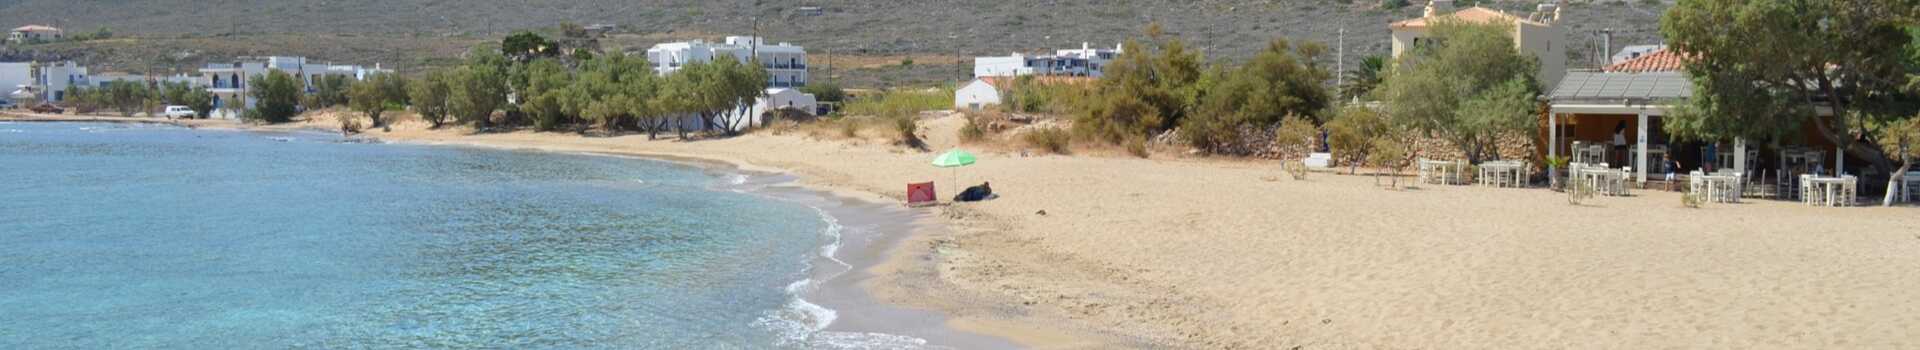 Kythira, pláž Diakofti 2 1